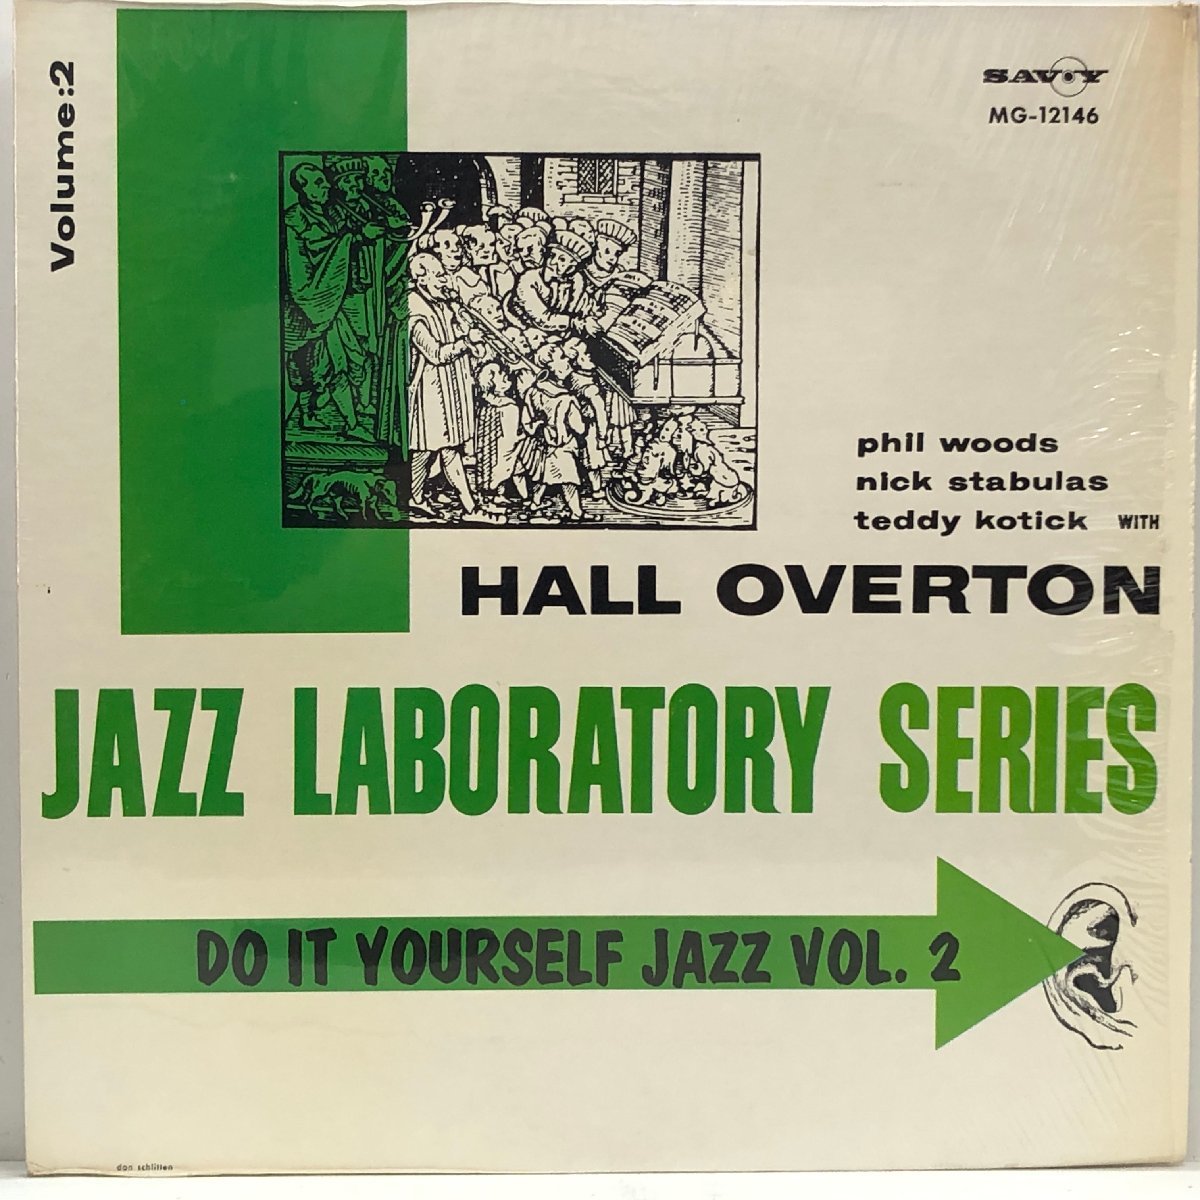 【US盤 LP】HALL OVERTON / JAZZ LABORATORY SERIES DO IT YOURSELF JAZZ VOL.2 / シュリンク SAVOY MG-12146 ▲の画像1